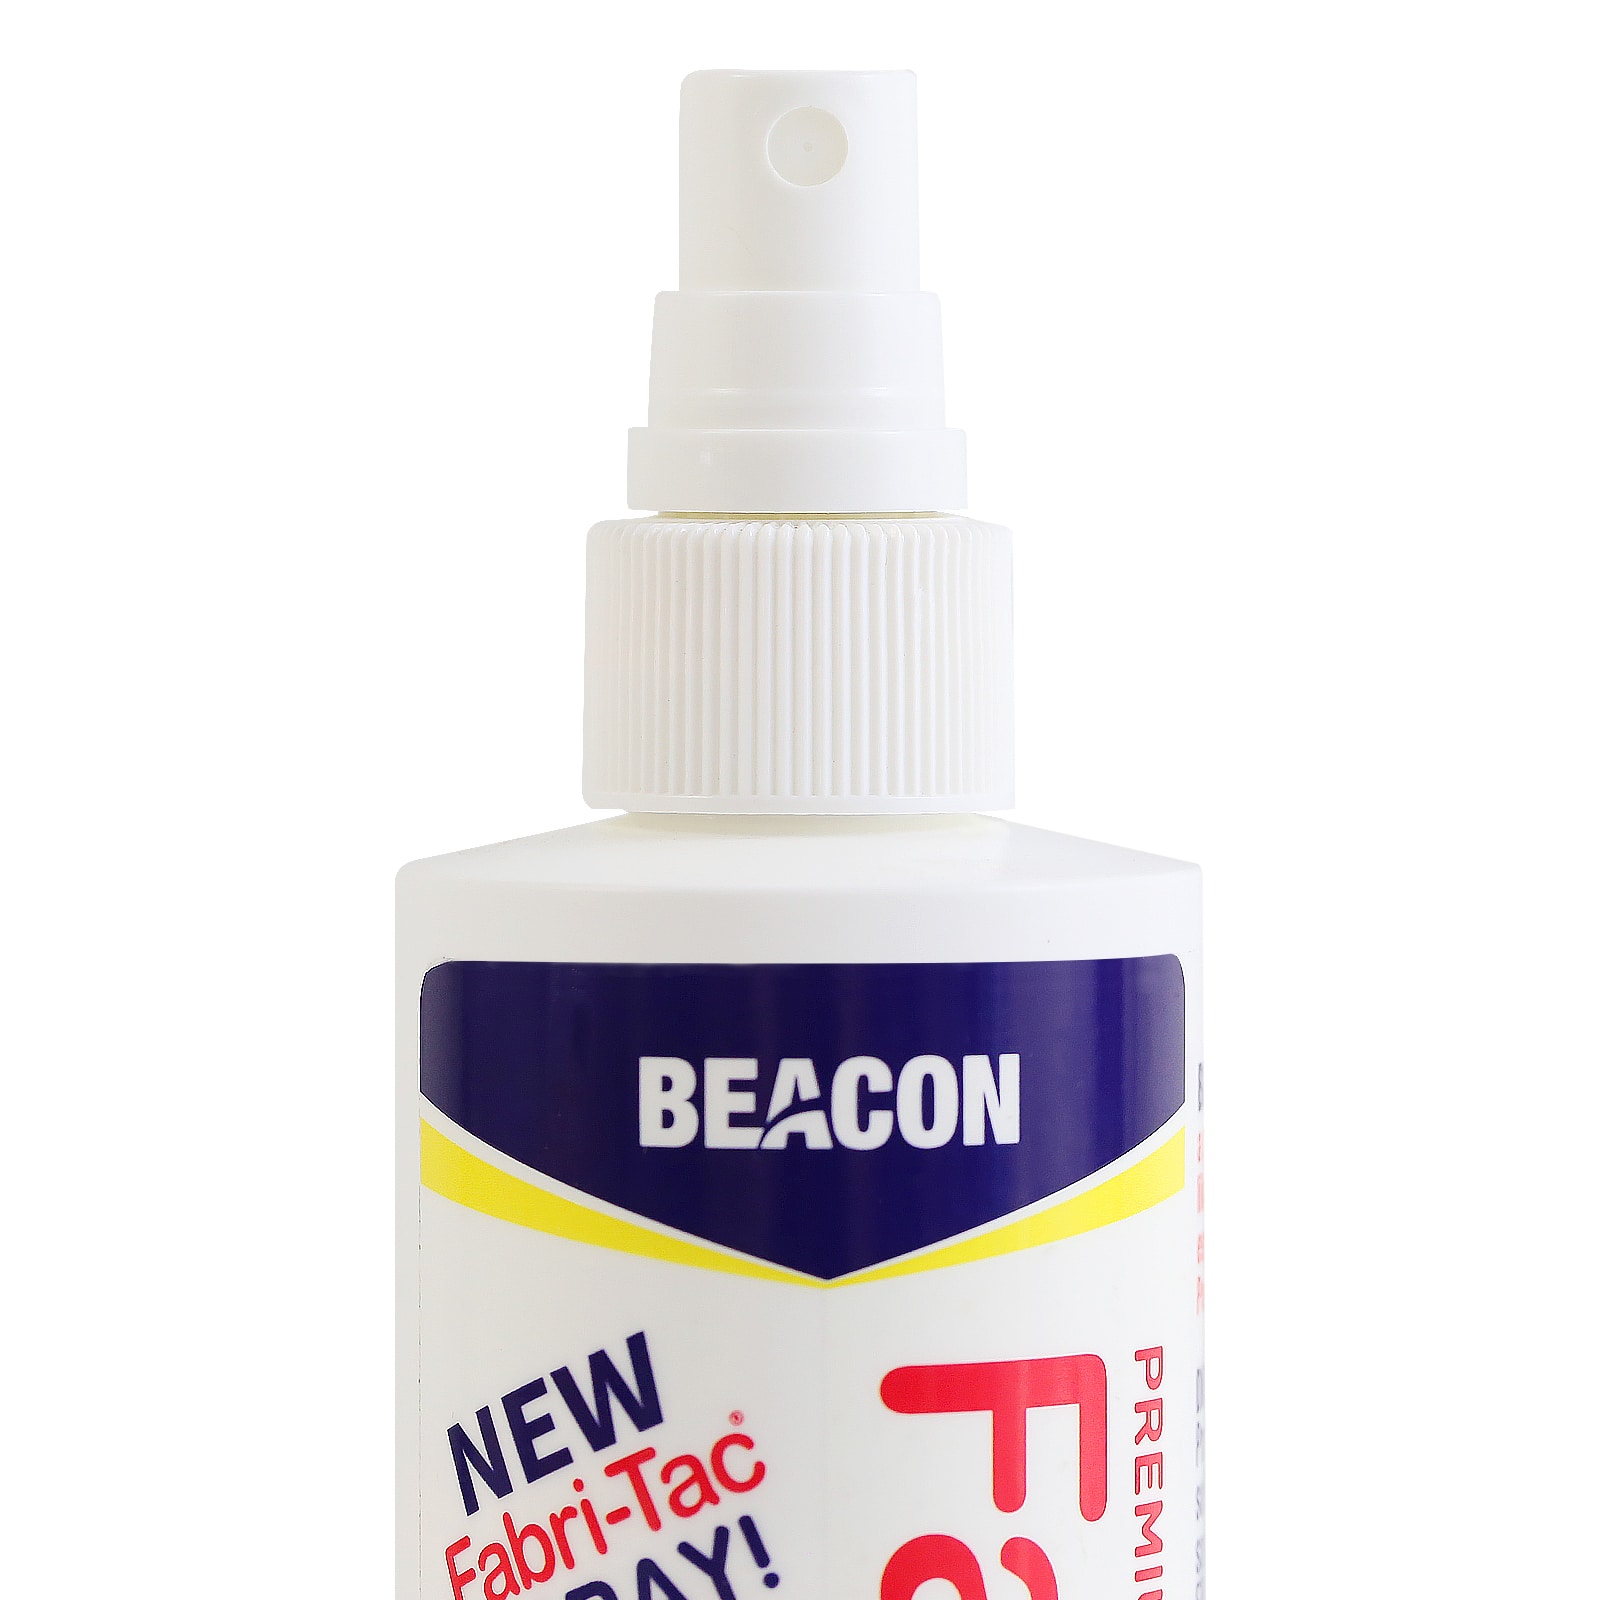 Beacon 8oz Fabric-Tac Adhesive - Glue - Adhesives - Notions